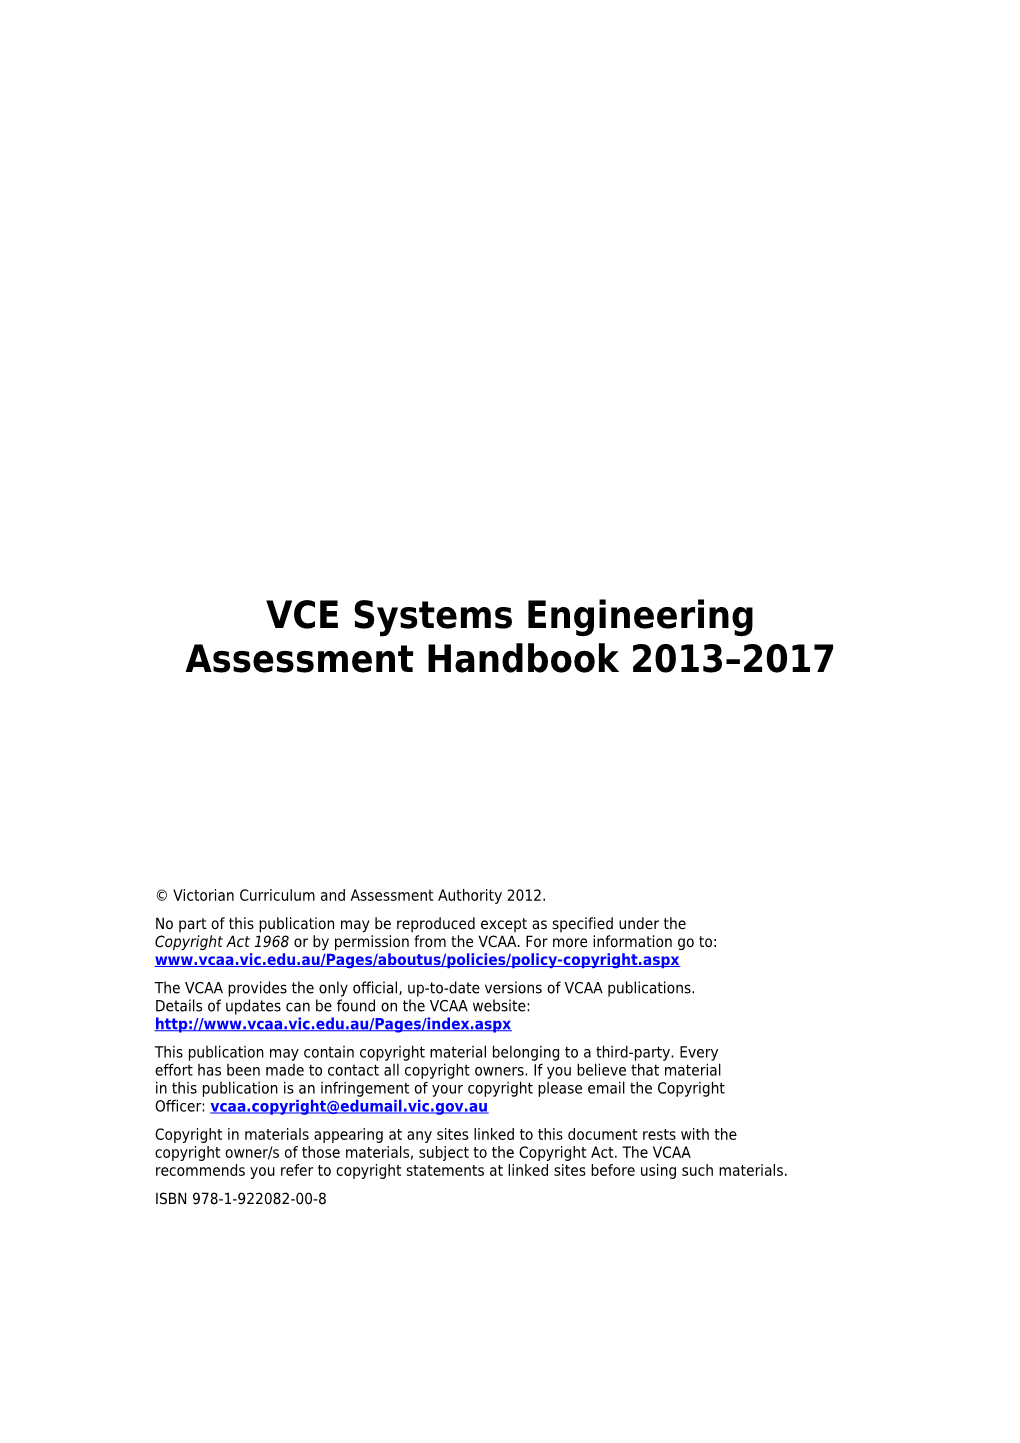 VCE Systems Engineering Assessment Handbook 2013-2017